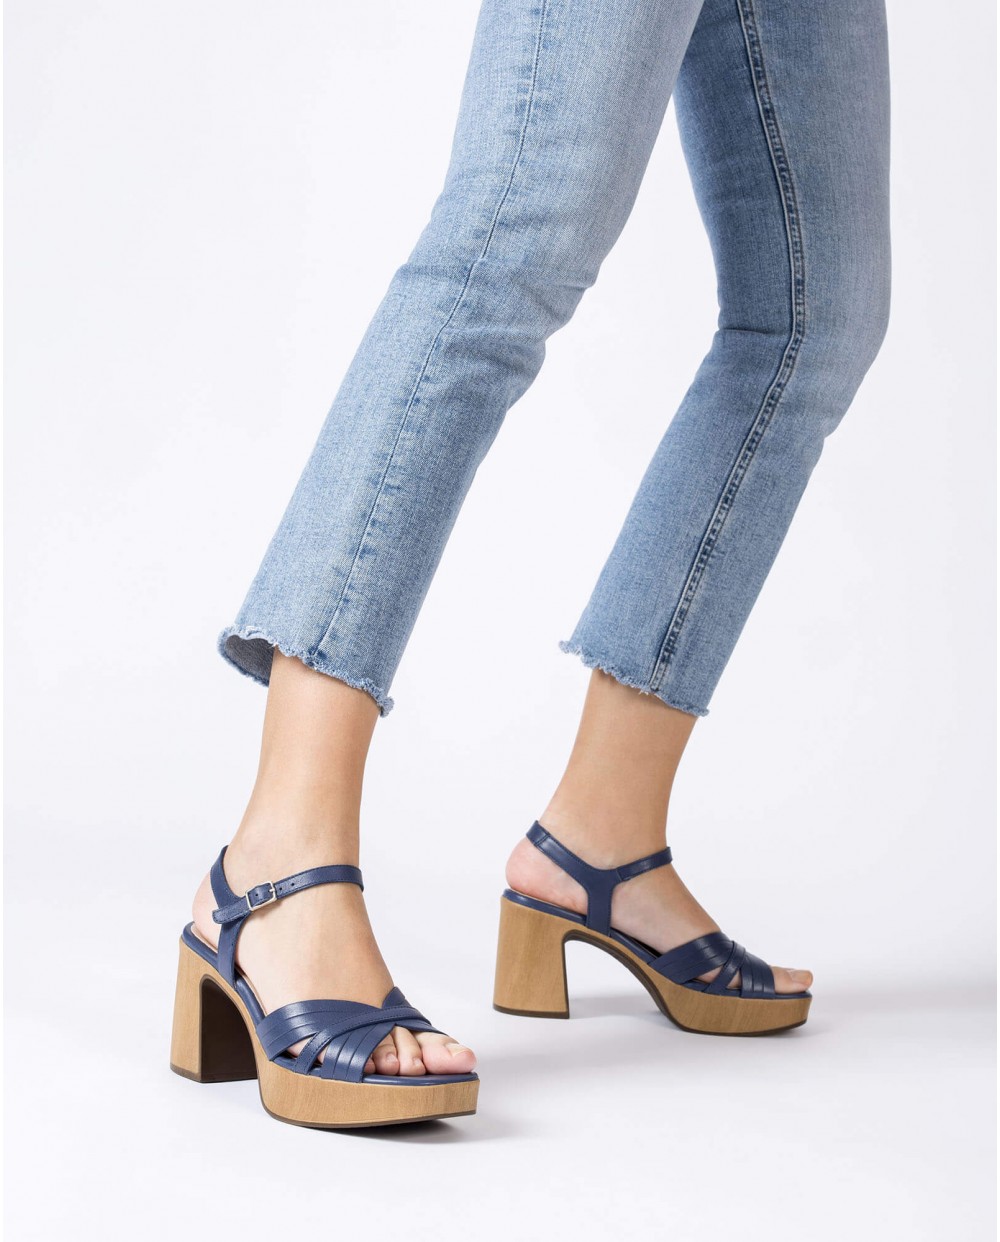 Blue Marisol sandals